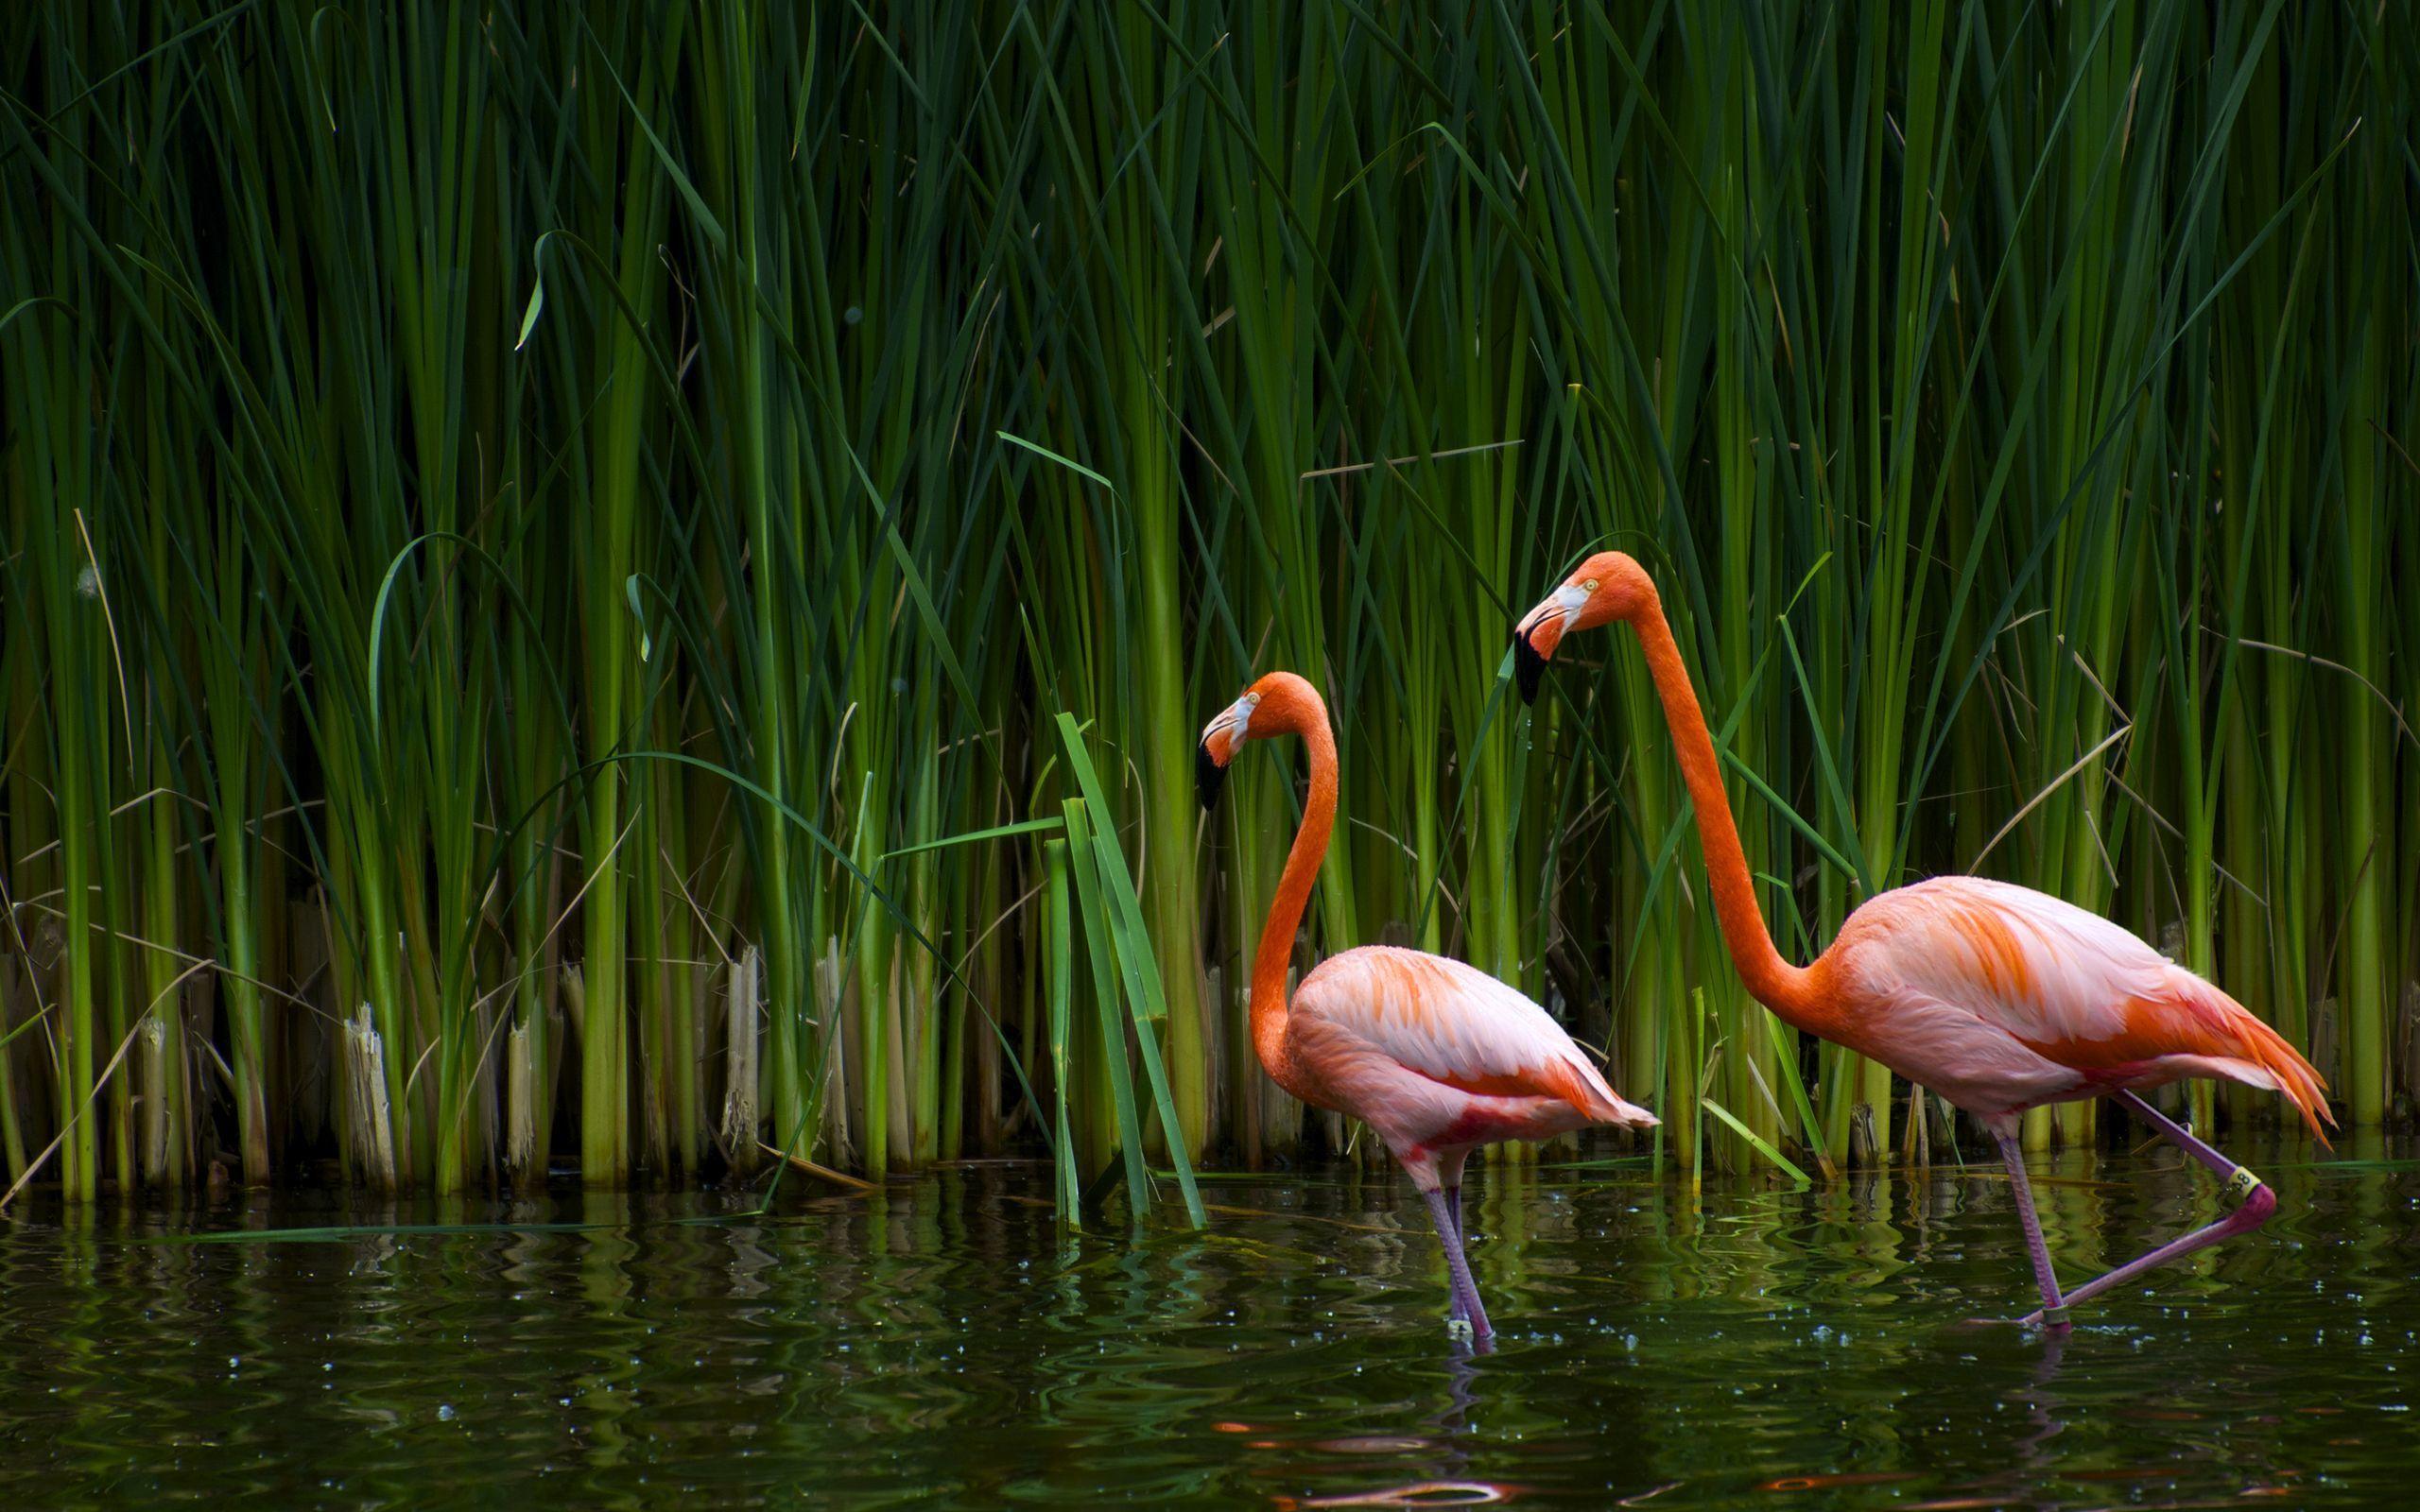 Flamingos Birds Wallpapers, Flamingos Birds Backgrounds for PC